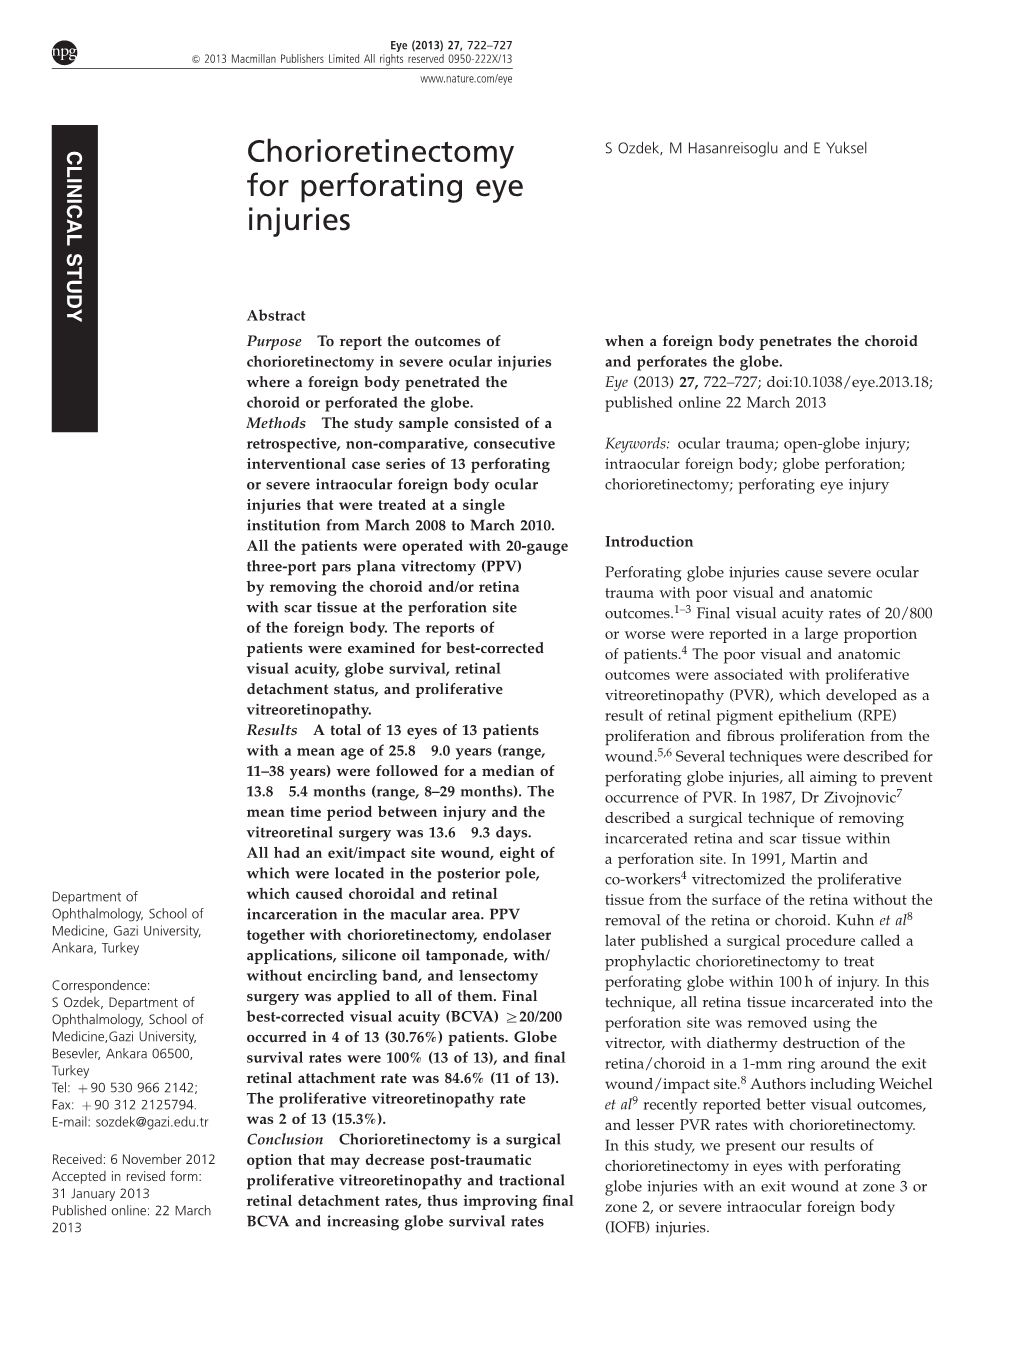 Chorioretinectomy for Perforating Eye Injuries S Ozdek Et Al 723